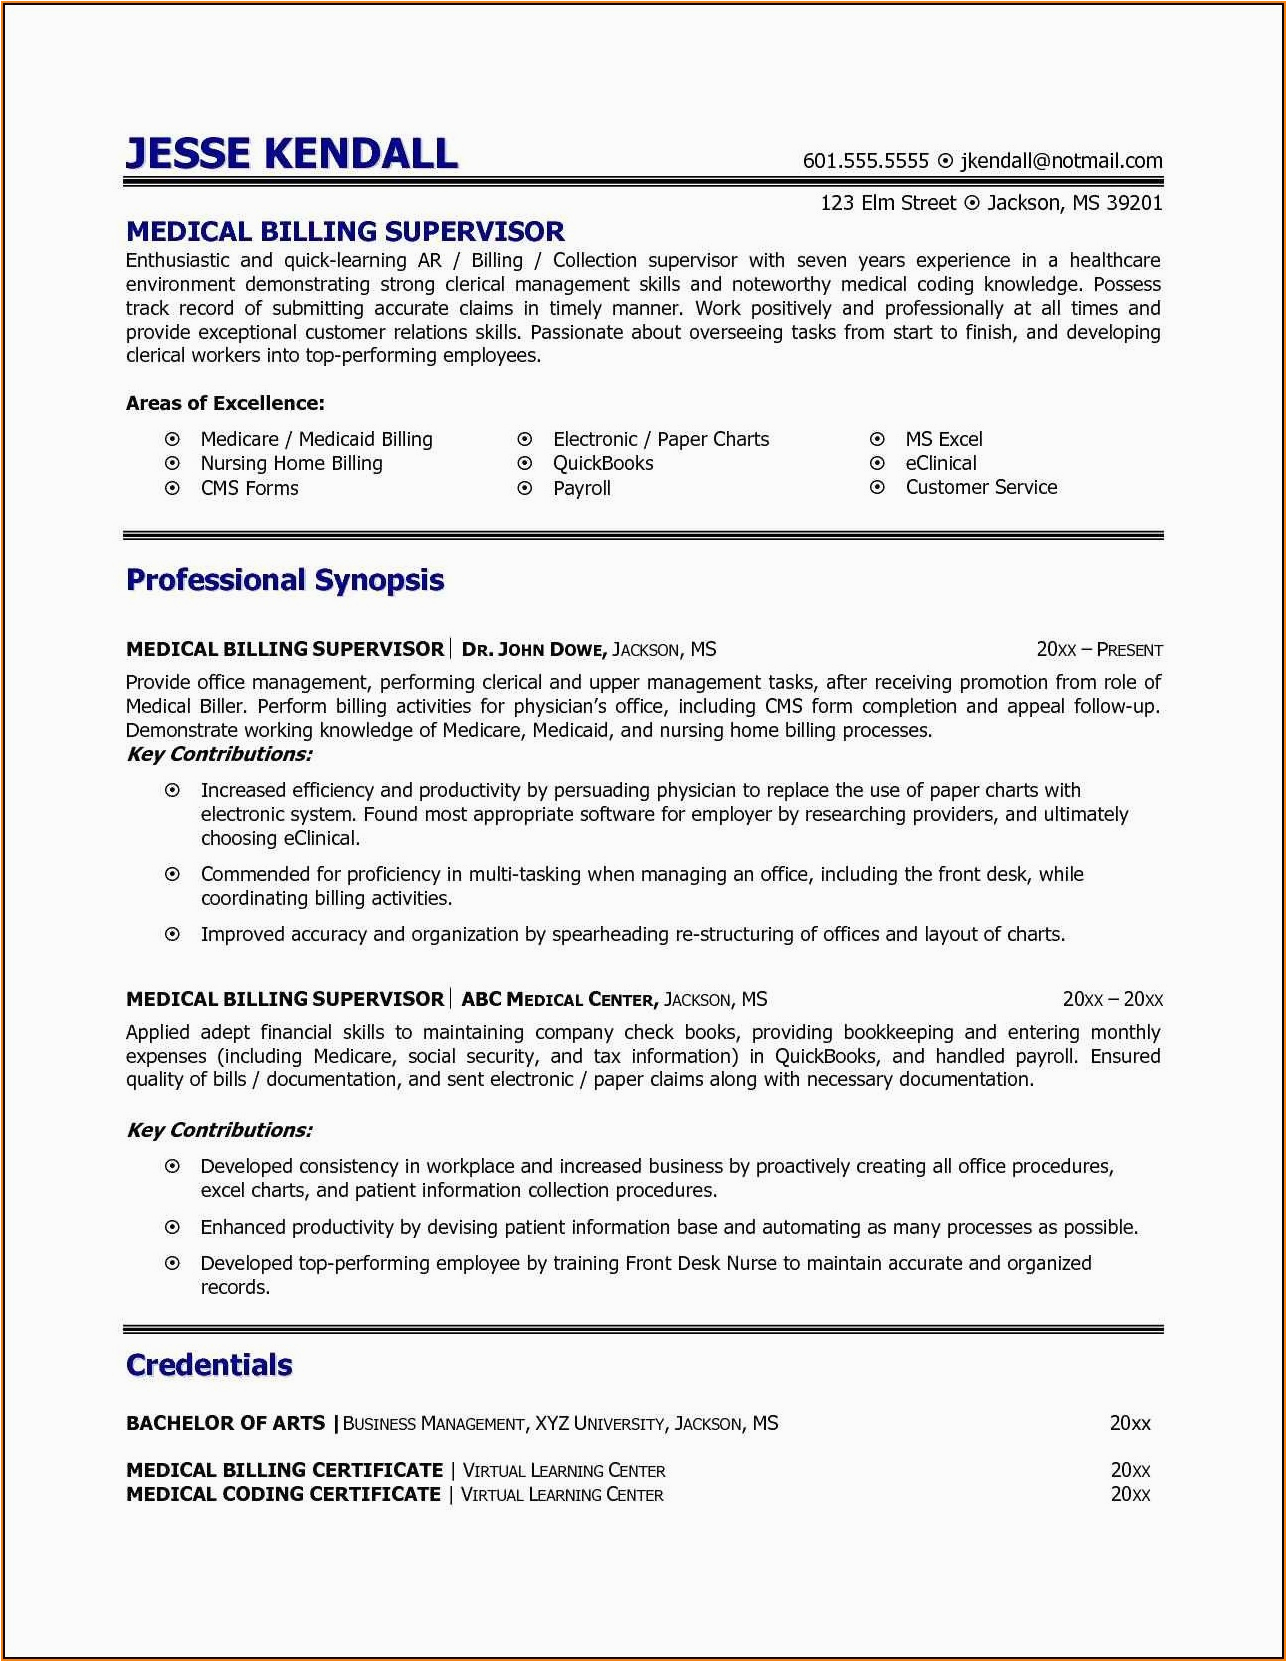 Sample Resume for Medical Billing and Coding with No Experience Medical Billing and Coding Resume with No Experience